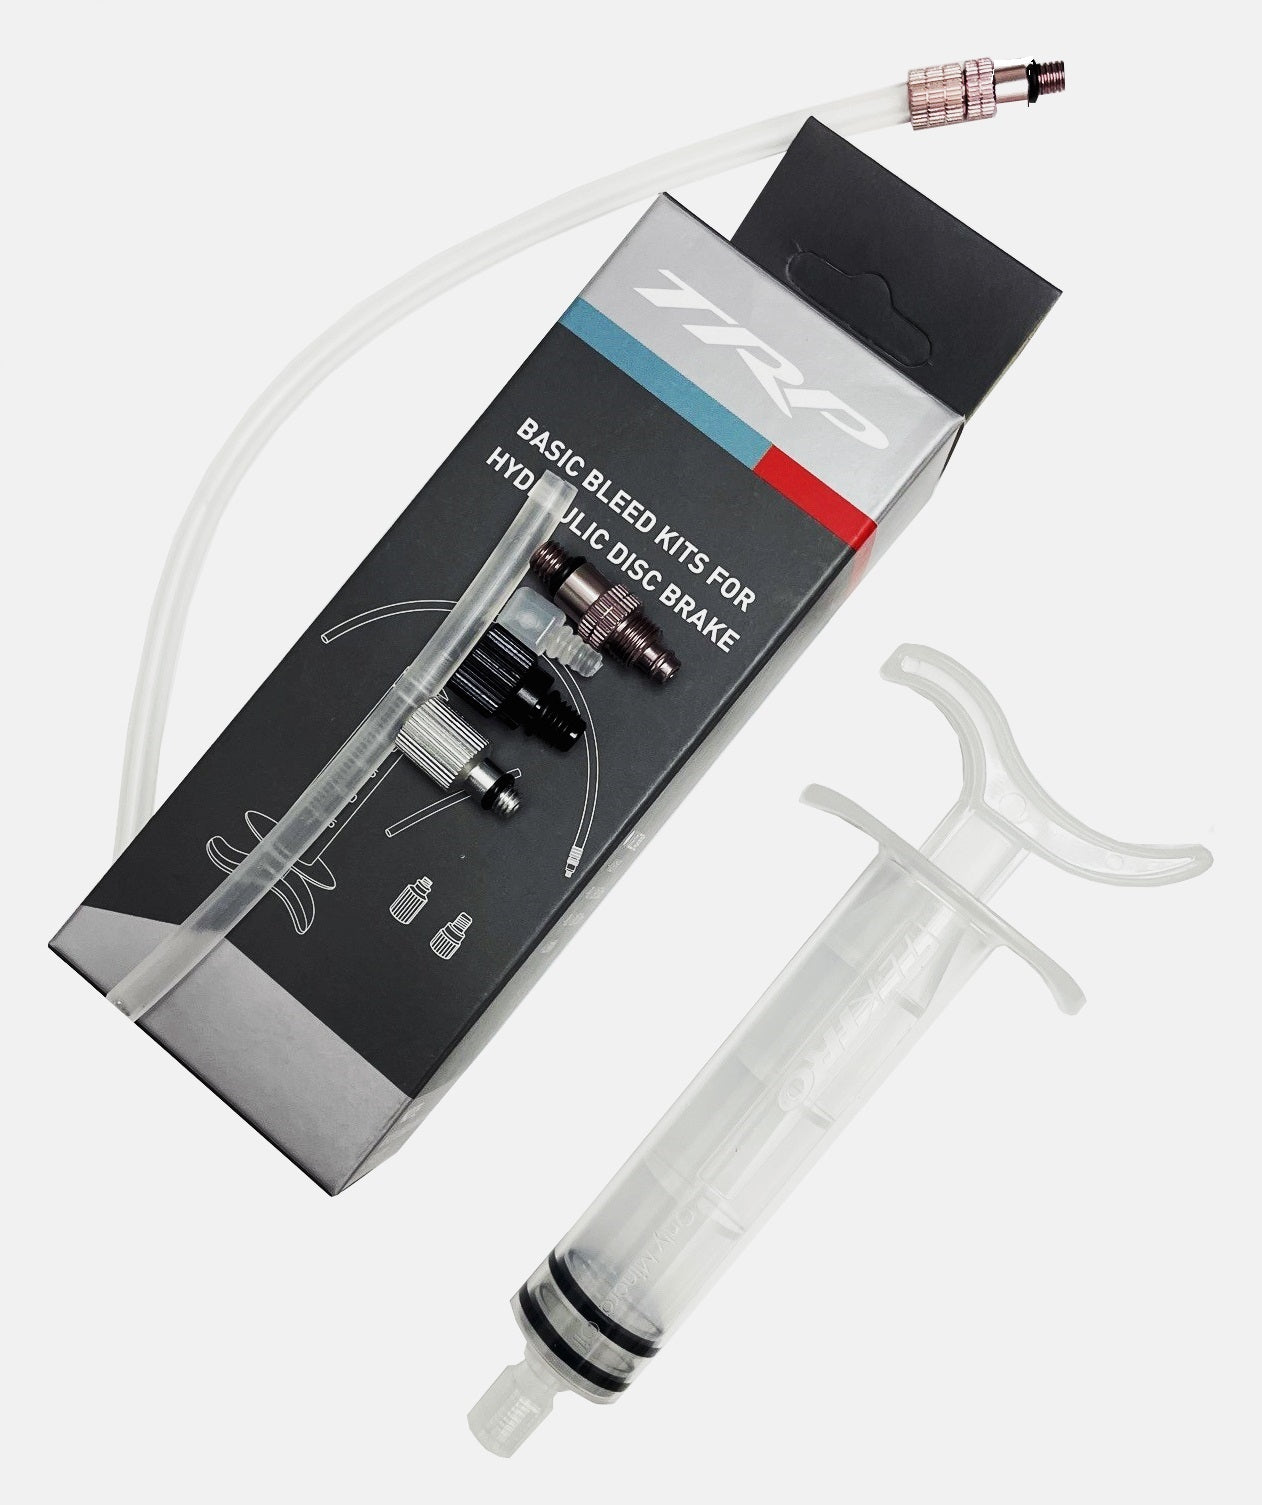 TRP Disc Brake Bleed Kit for bleeding TRP Hydraulic Brakes w/ 5.0mm Hose